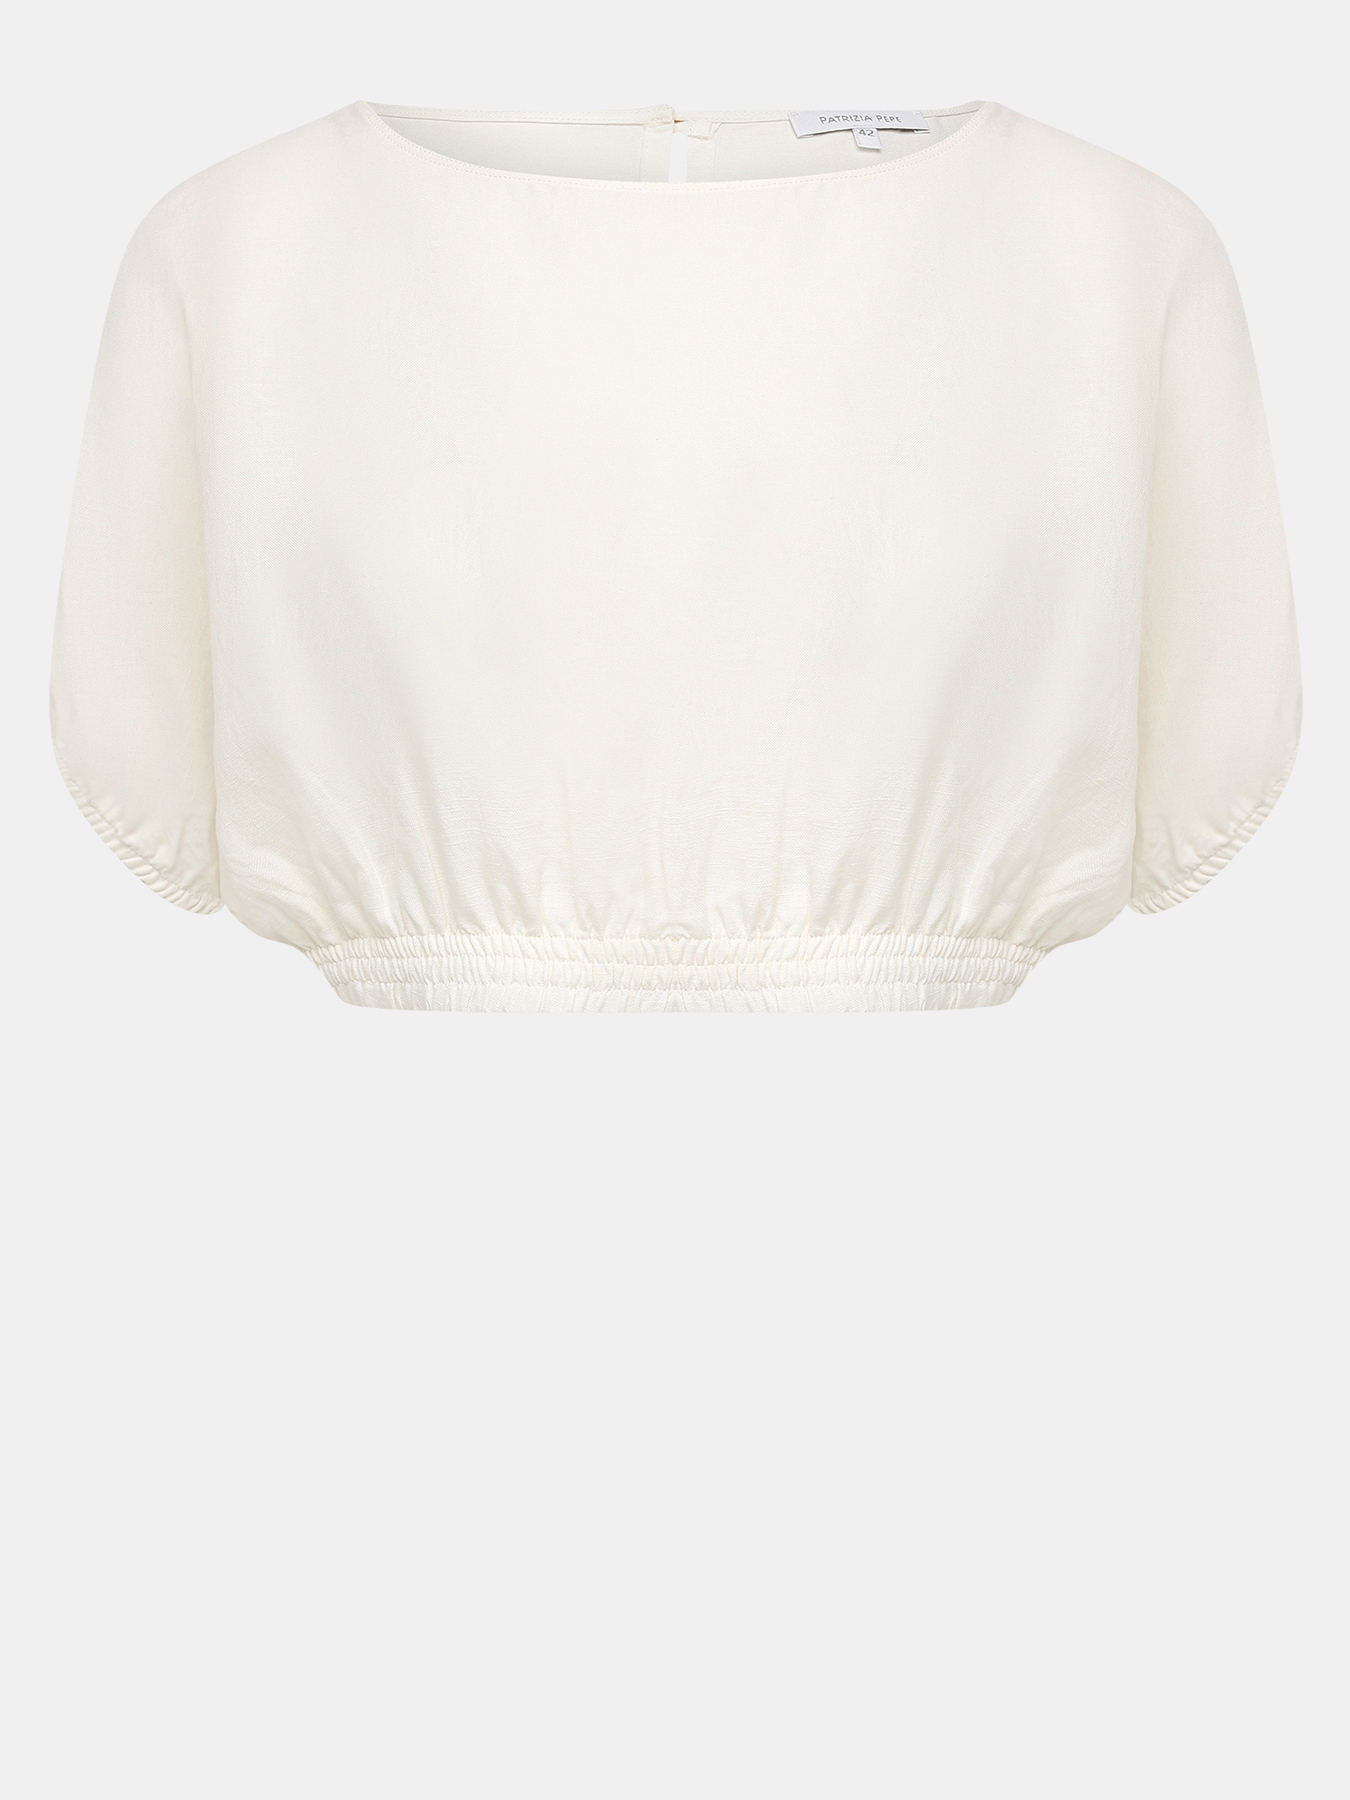 Блуза (топ) Patrizia Pepe 418030-021, цвет белый, размер 42